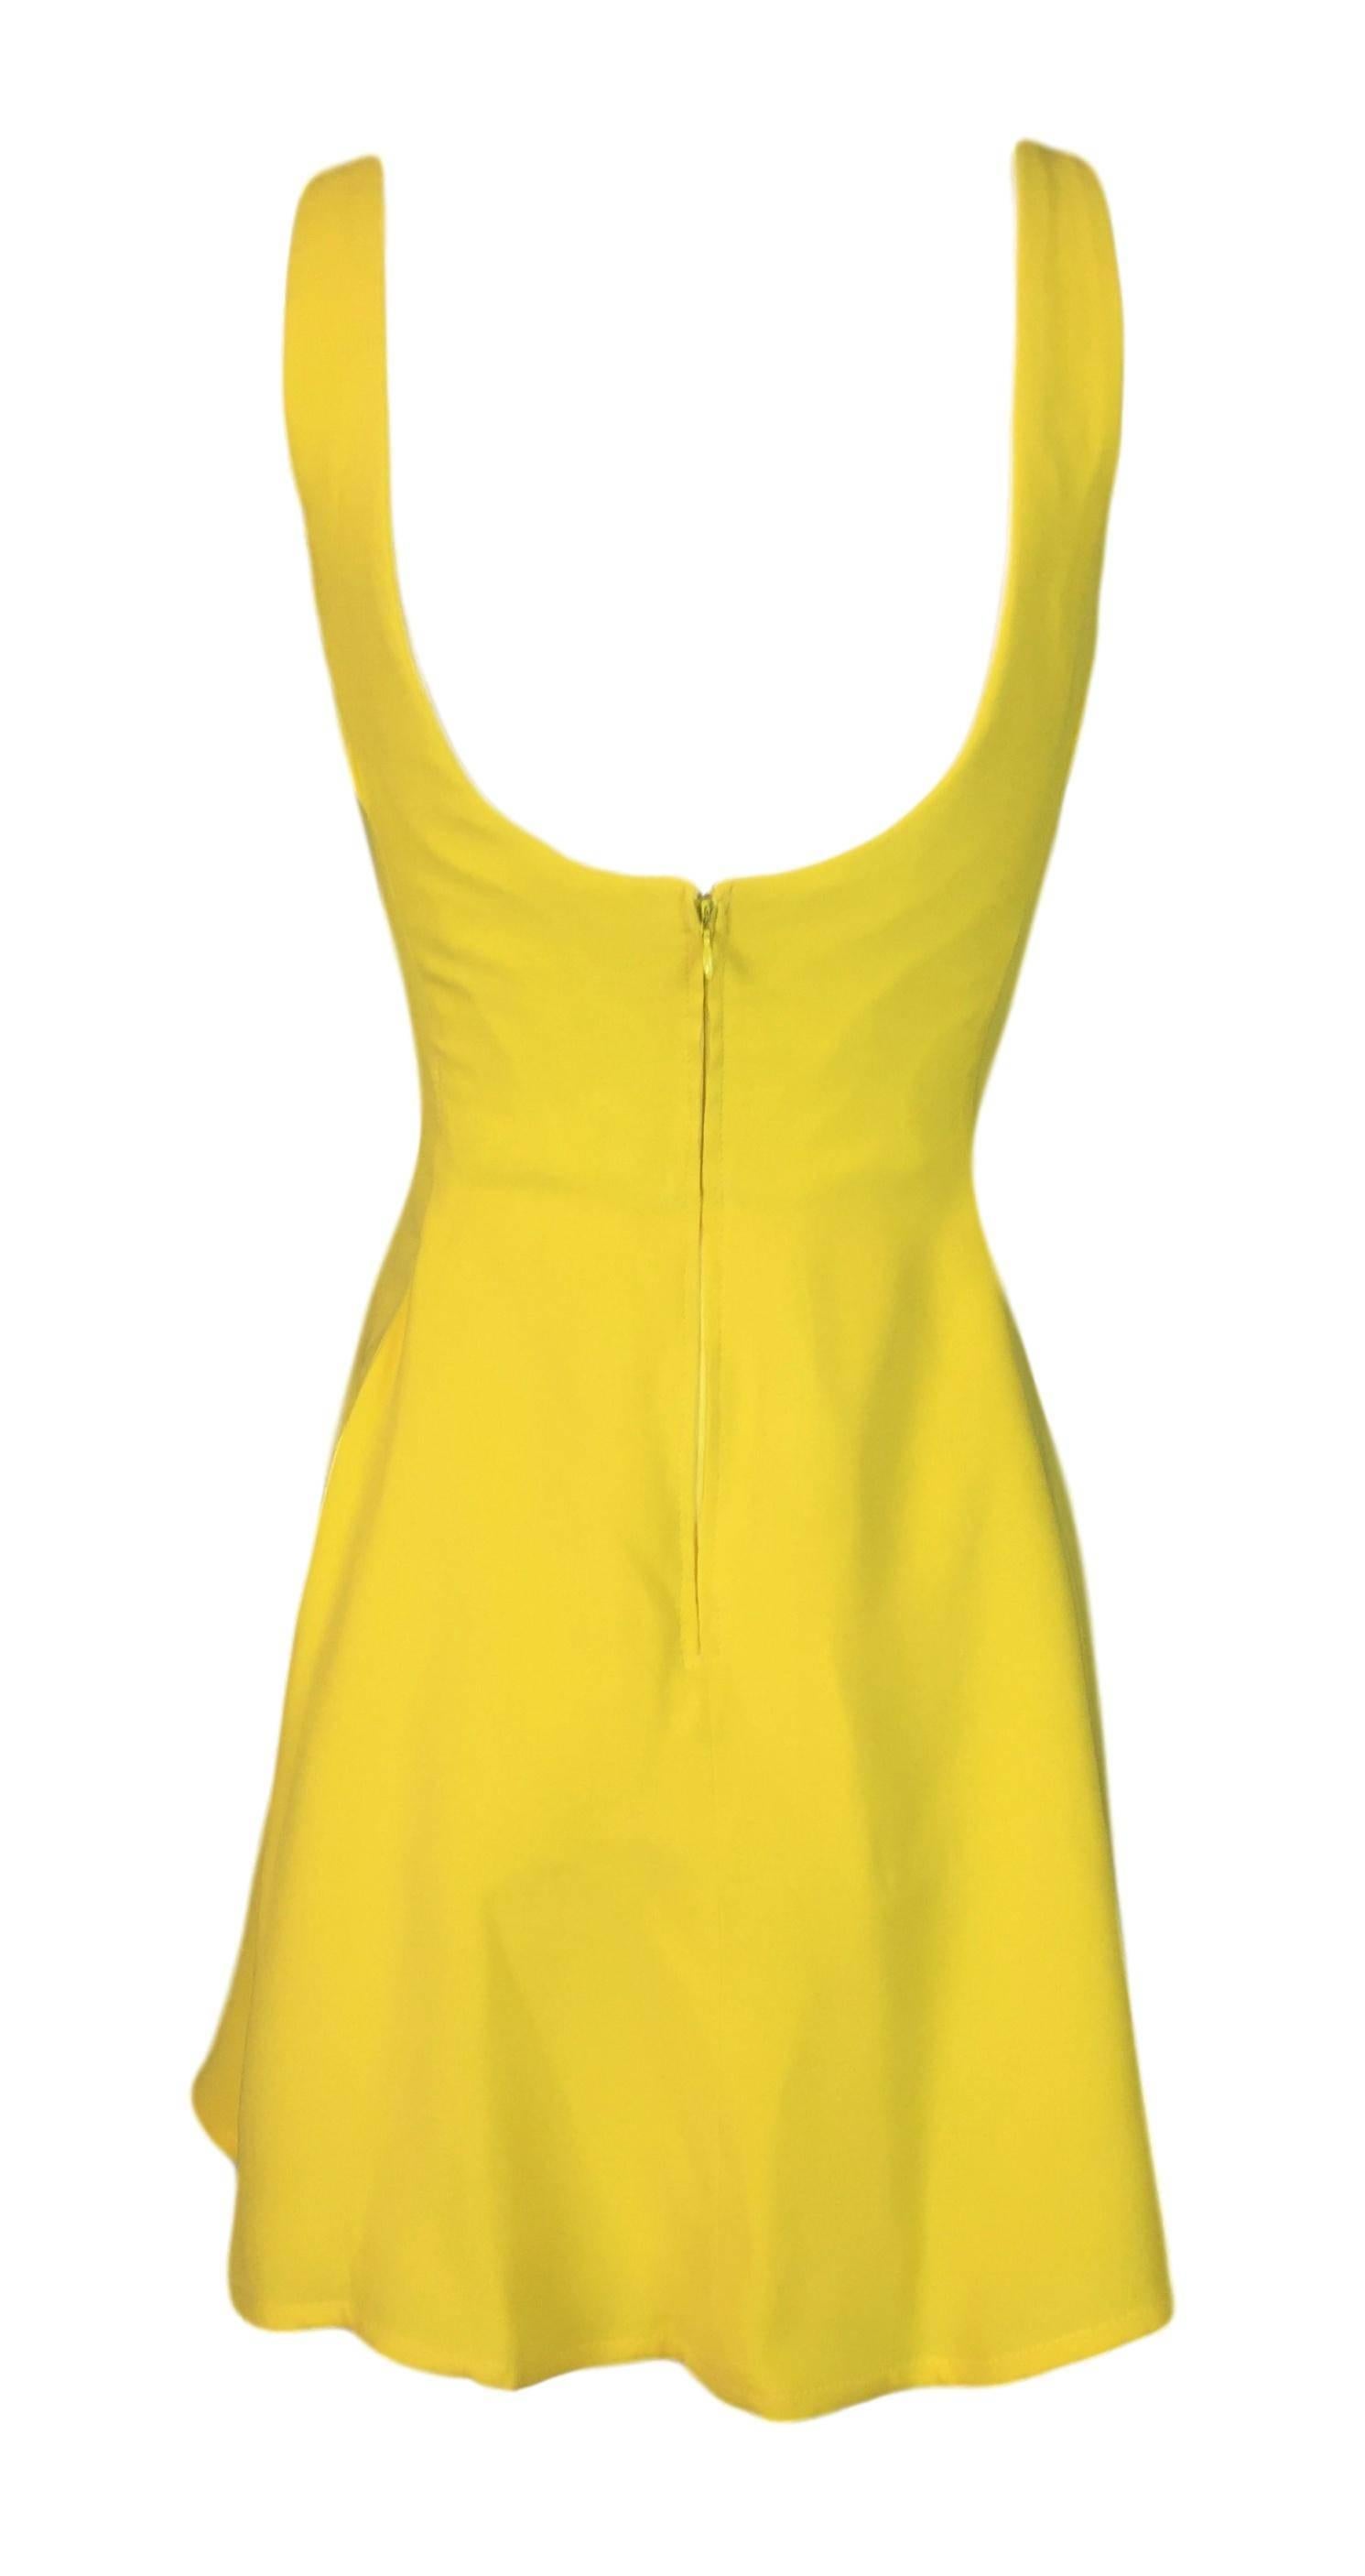 versace 1995 yellow dress